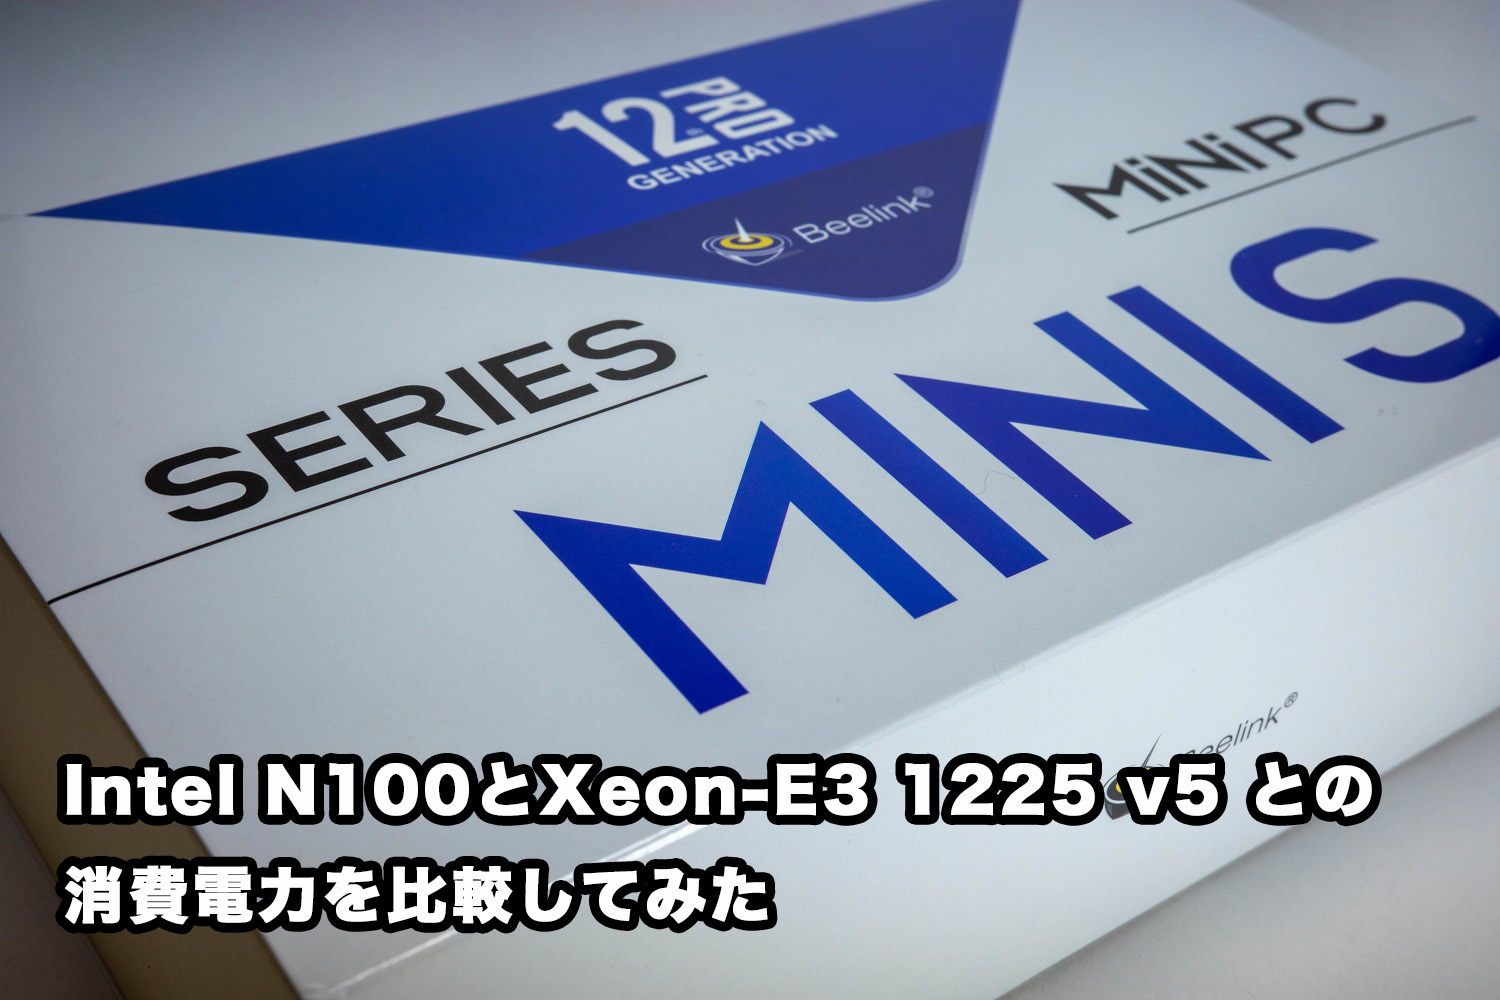 Intel N100とXeon E3-1225 v5との消費電力を比較してみた